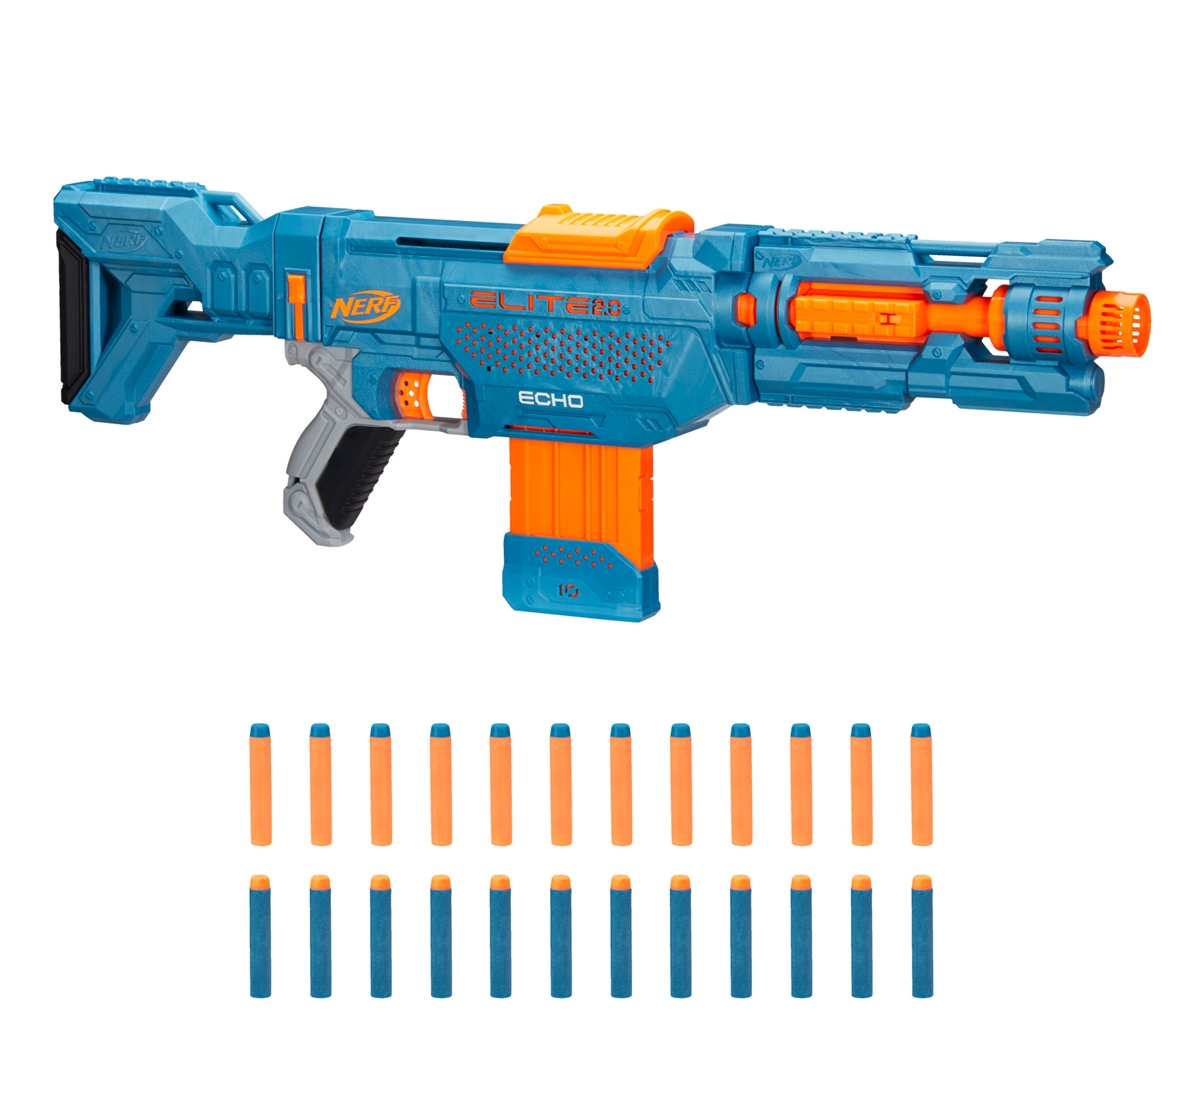 Nerf | Nerf Elite 2.0 Echo CS 10 Blaster Toy for Kids 8Y+, Multicolour